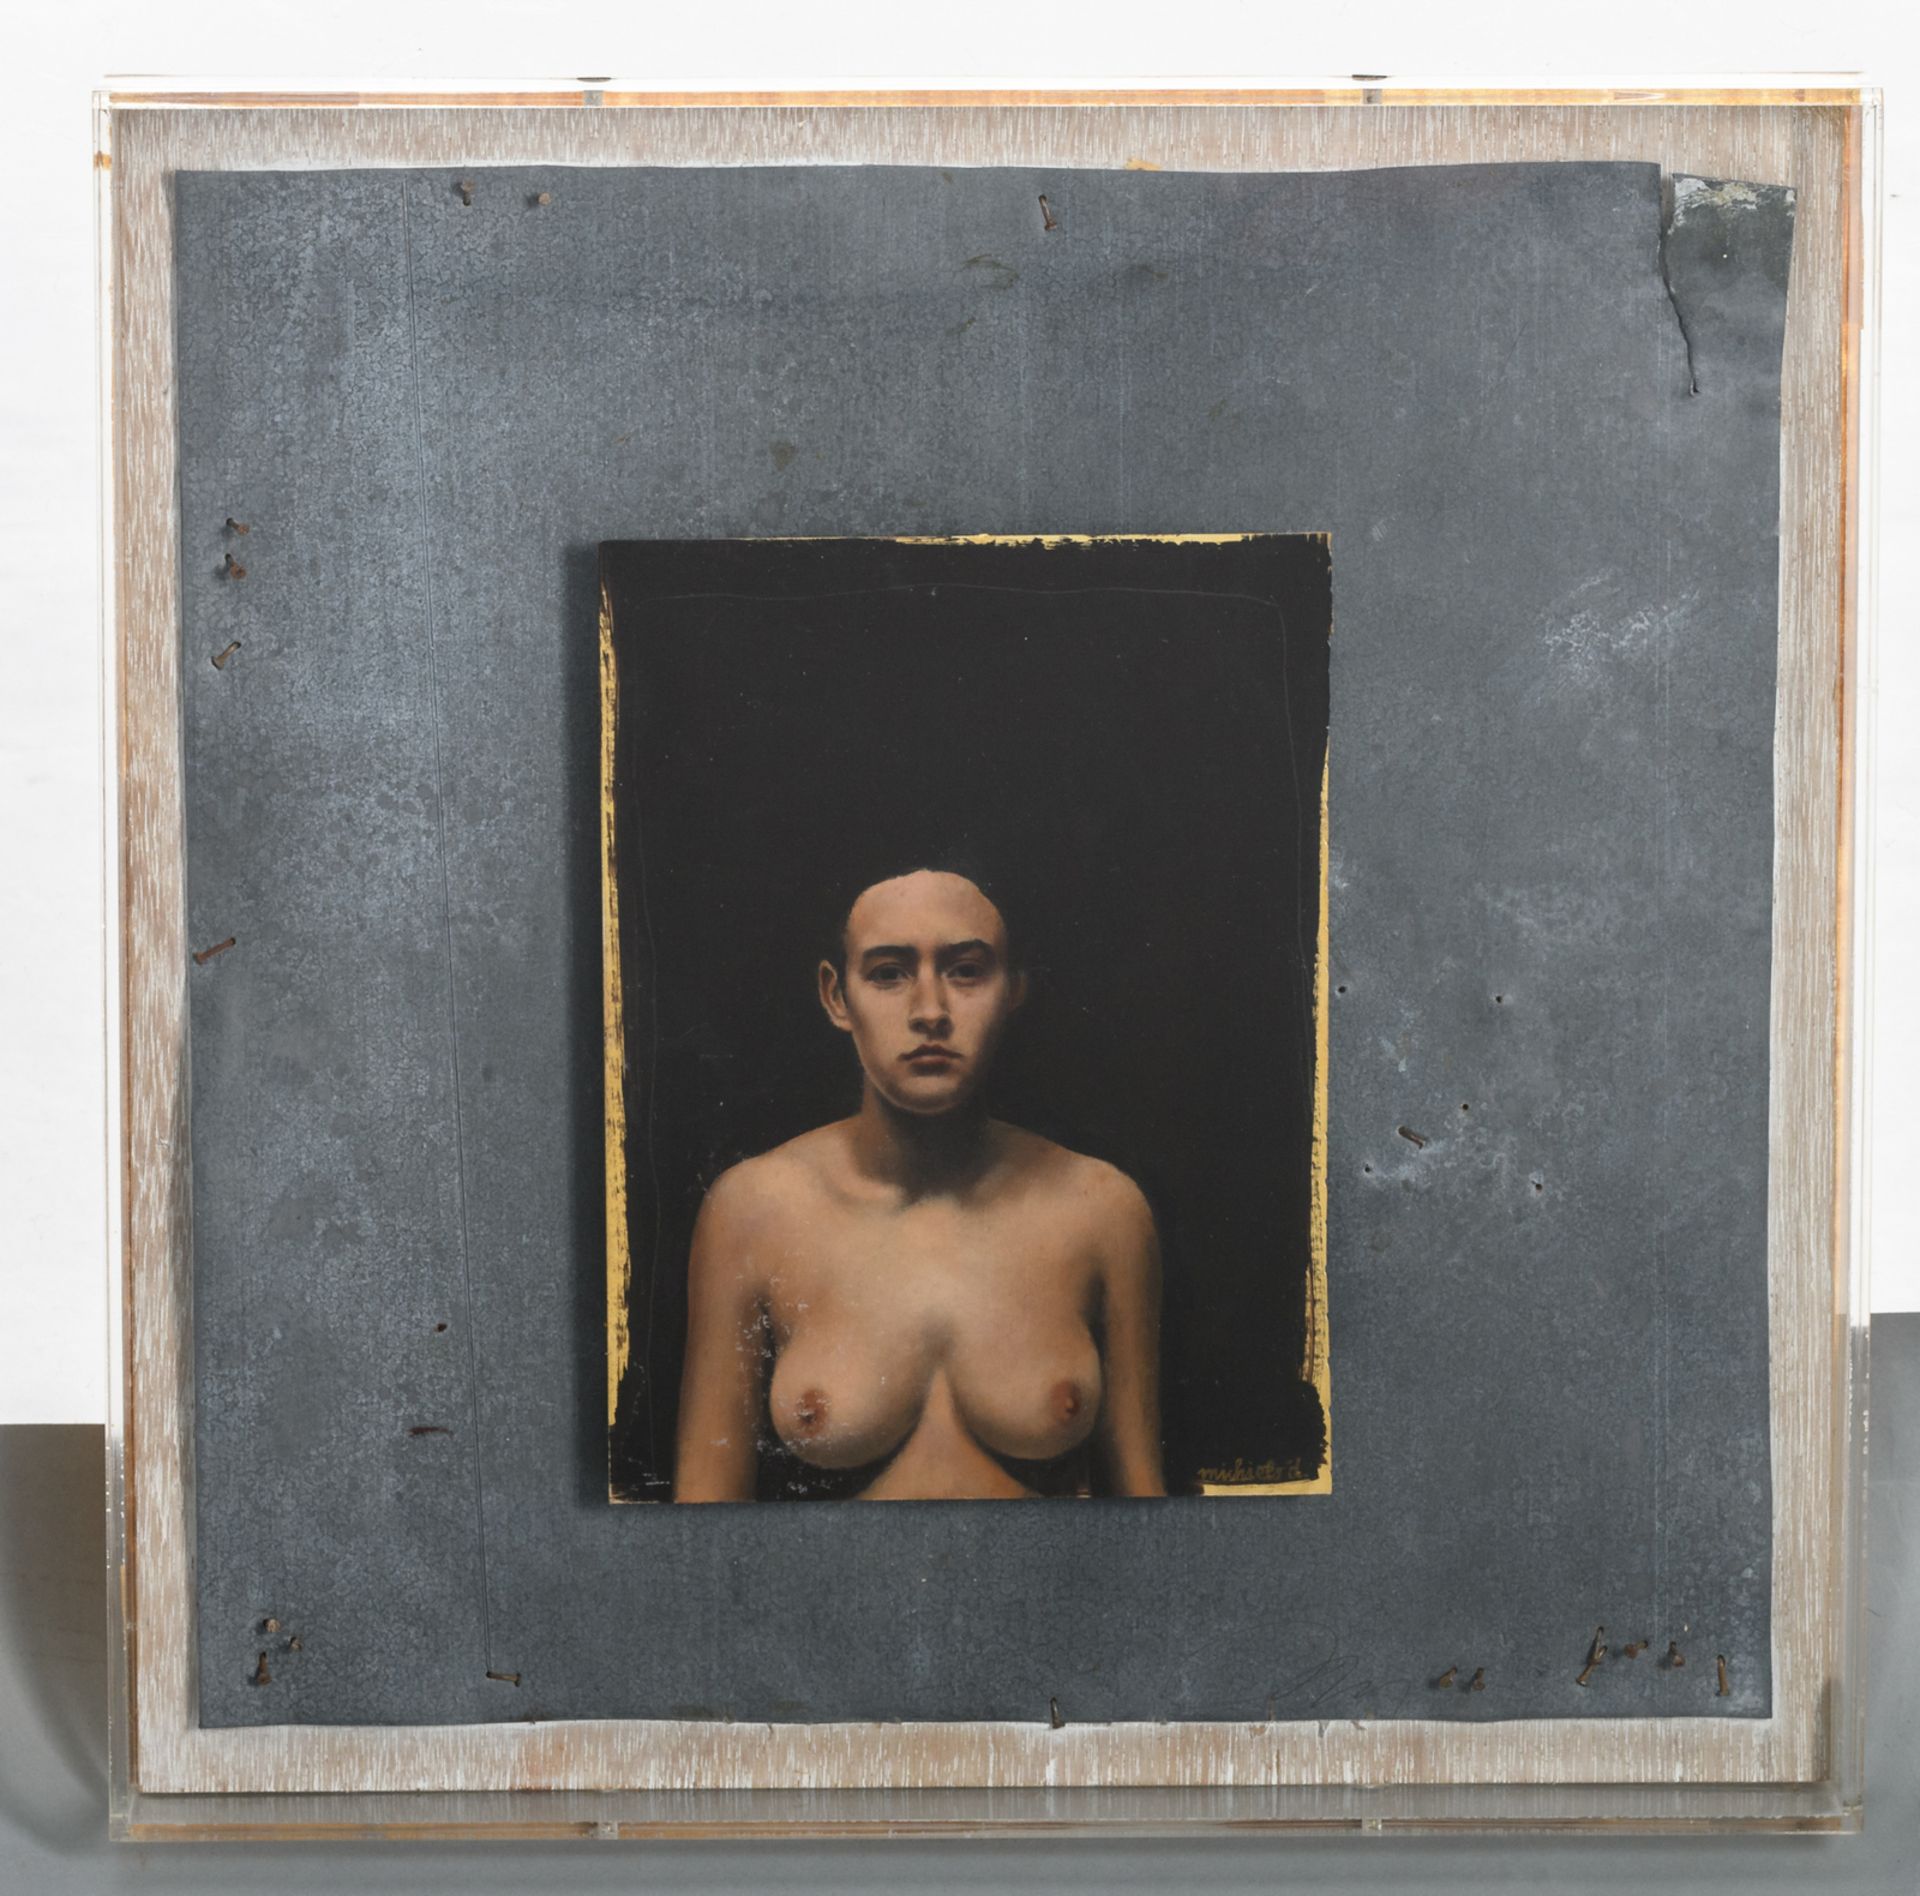 Michiels D., 'Marianne', oil on zinc, dated 1998, in a plexi box, 36 x 36 cm - Bild 2 aus 7